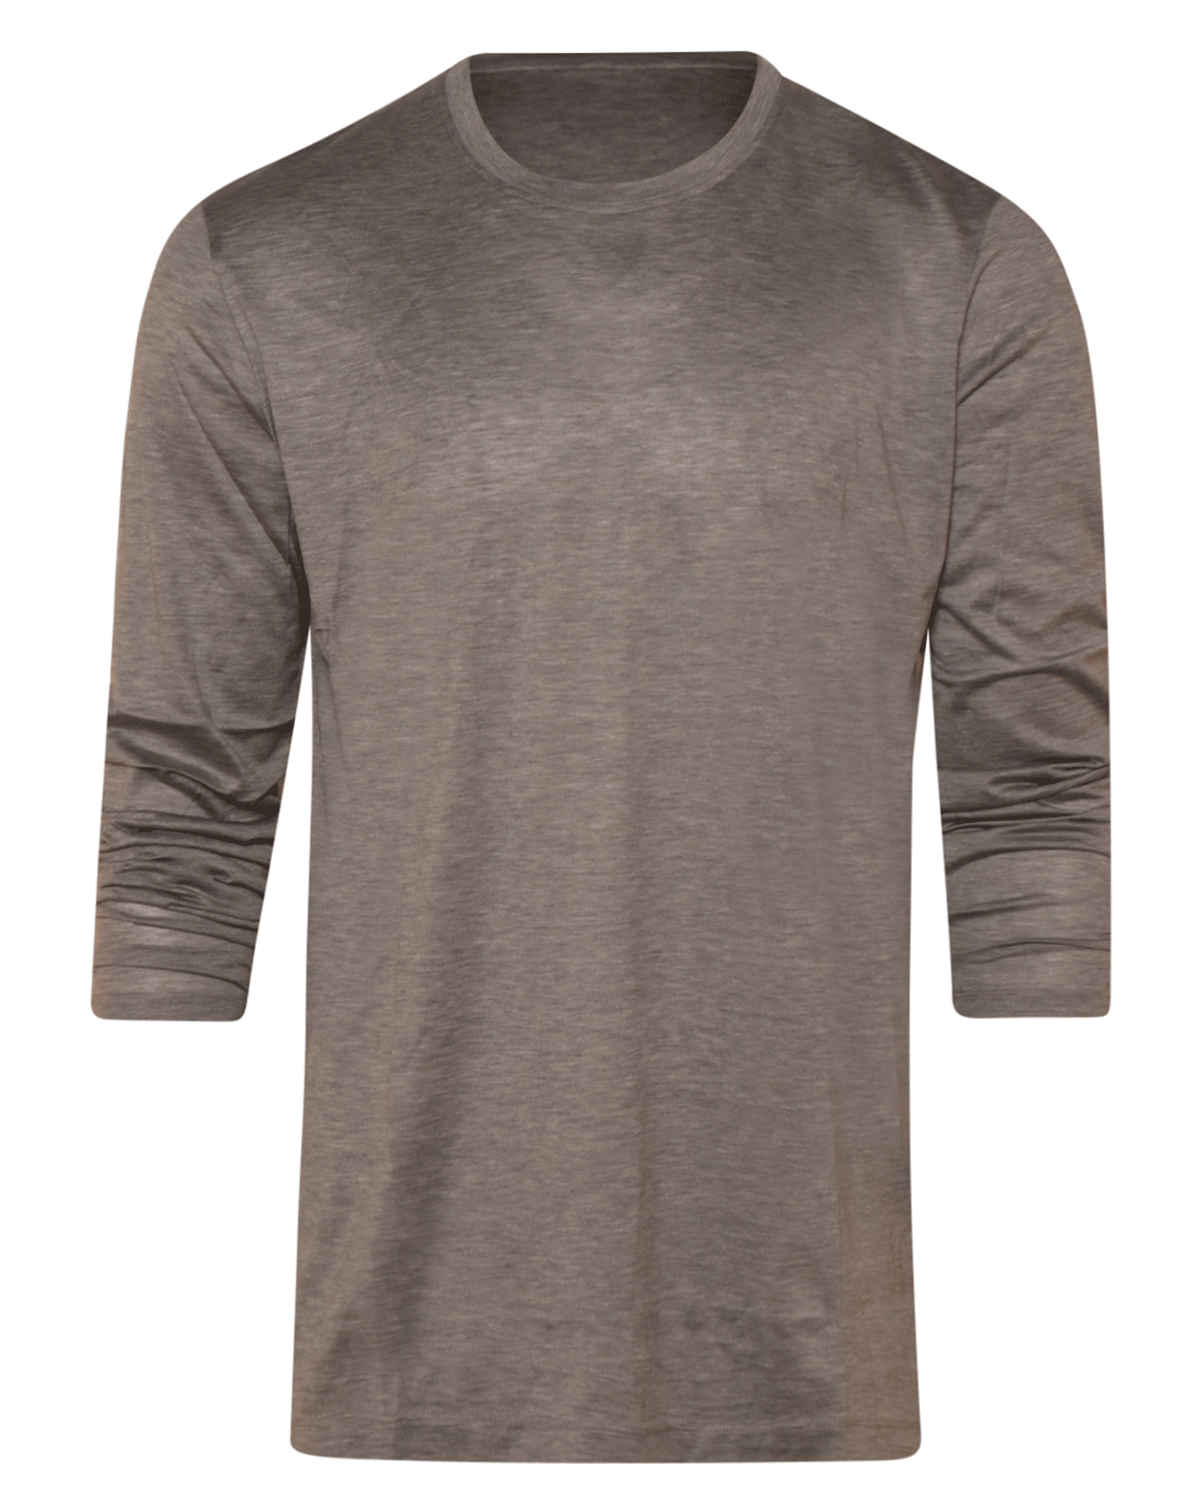 Silver Jersey Silk and Cotton Blend T-Shirt